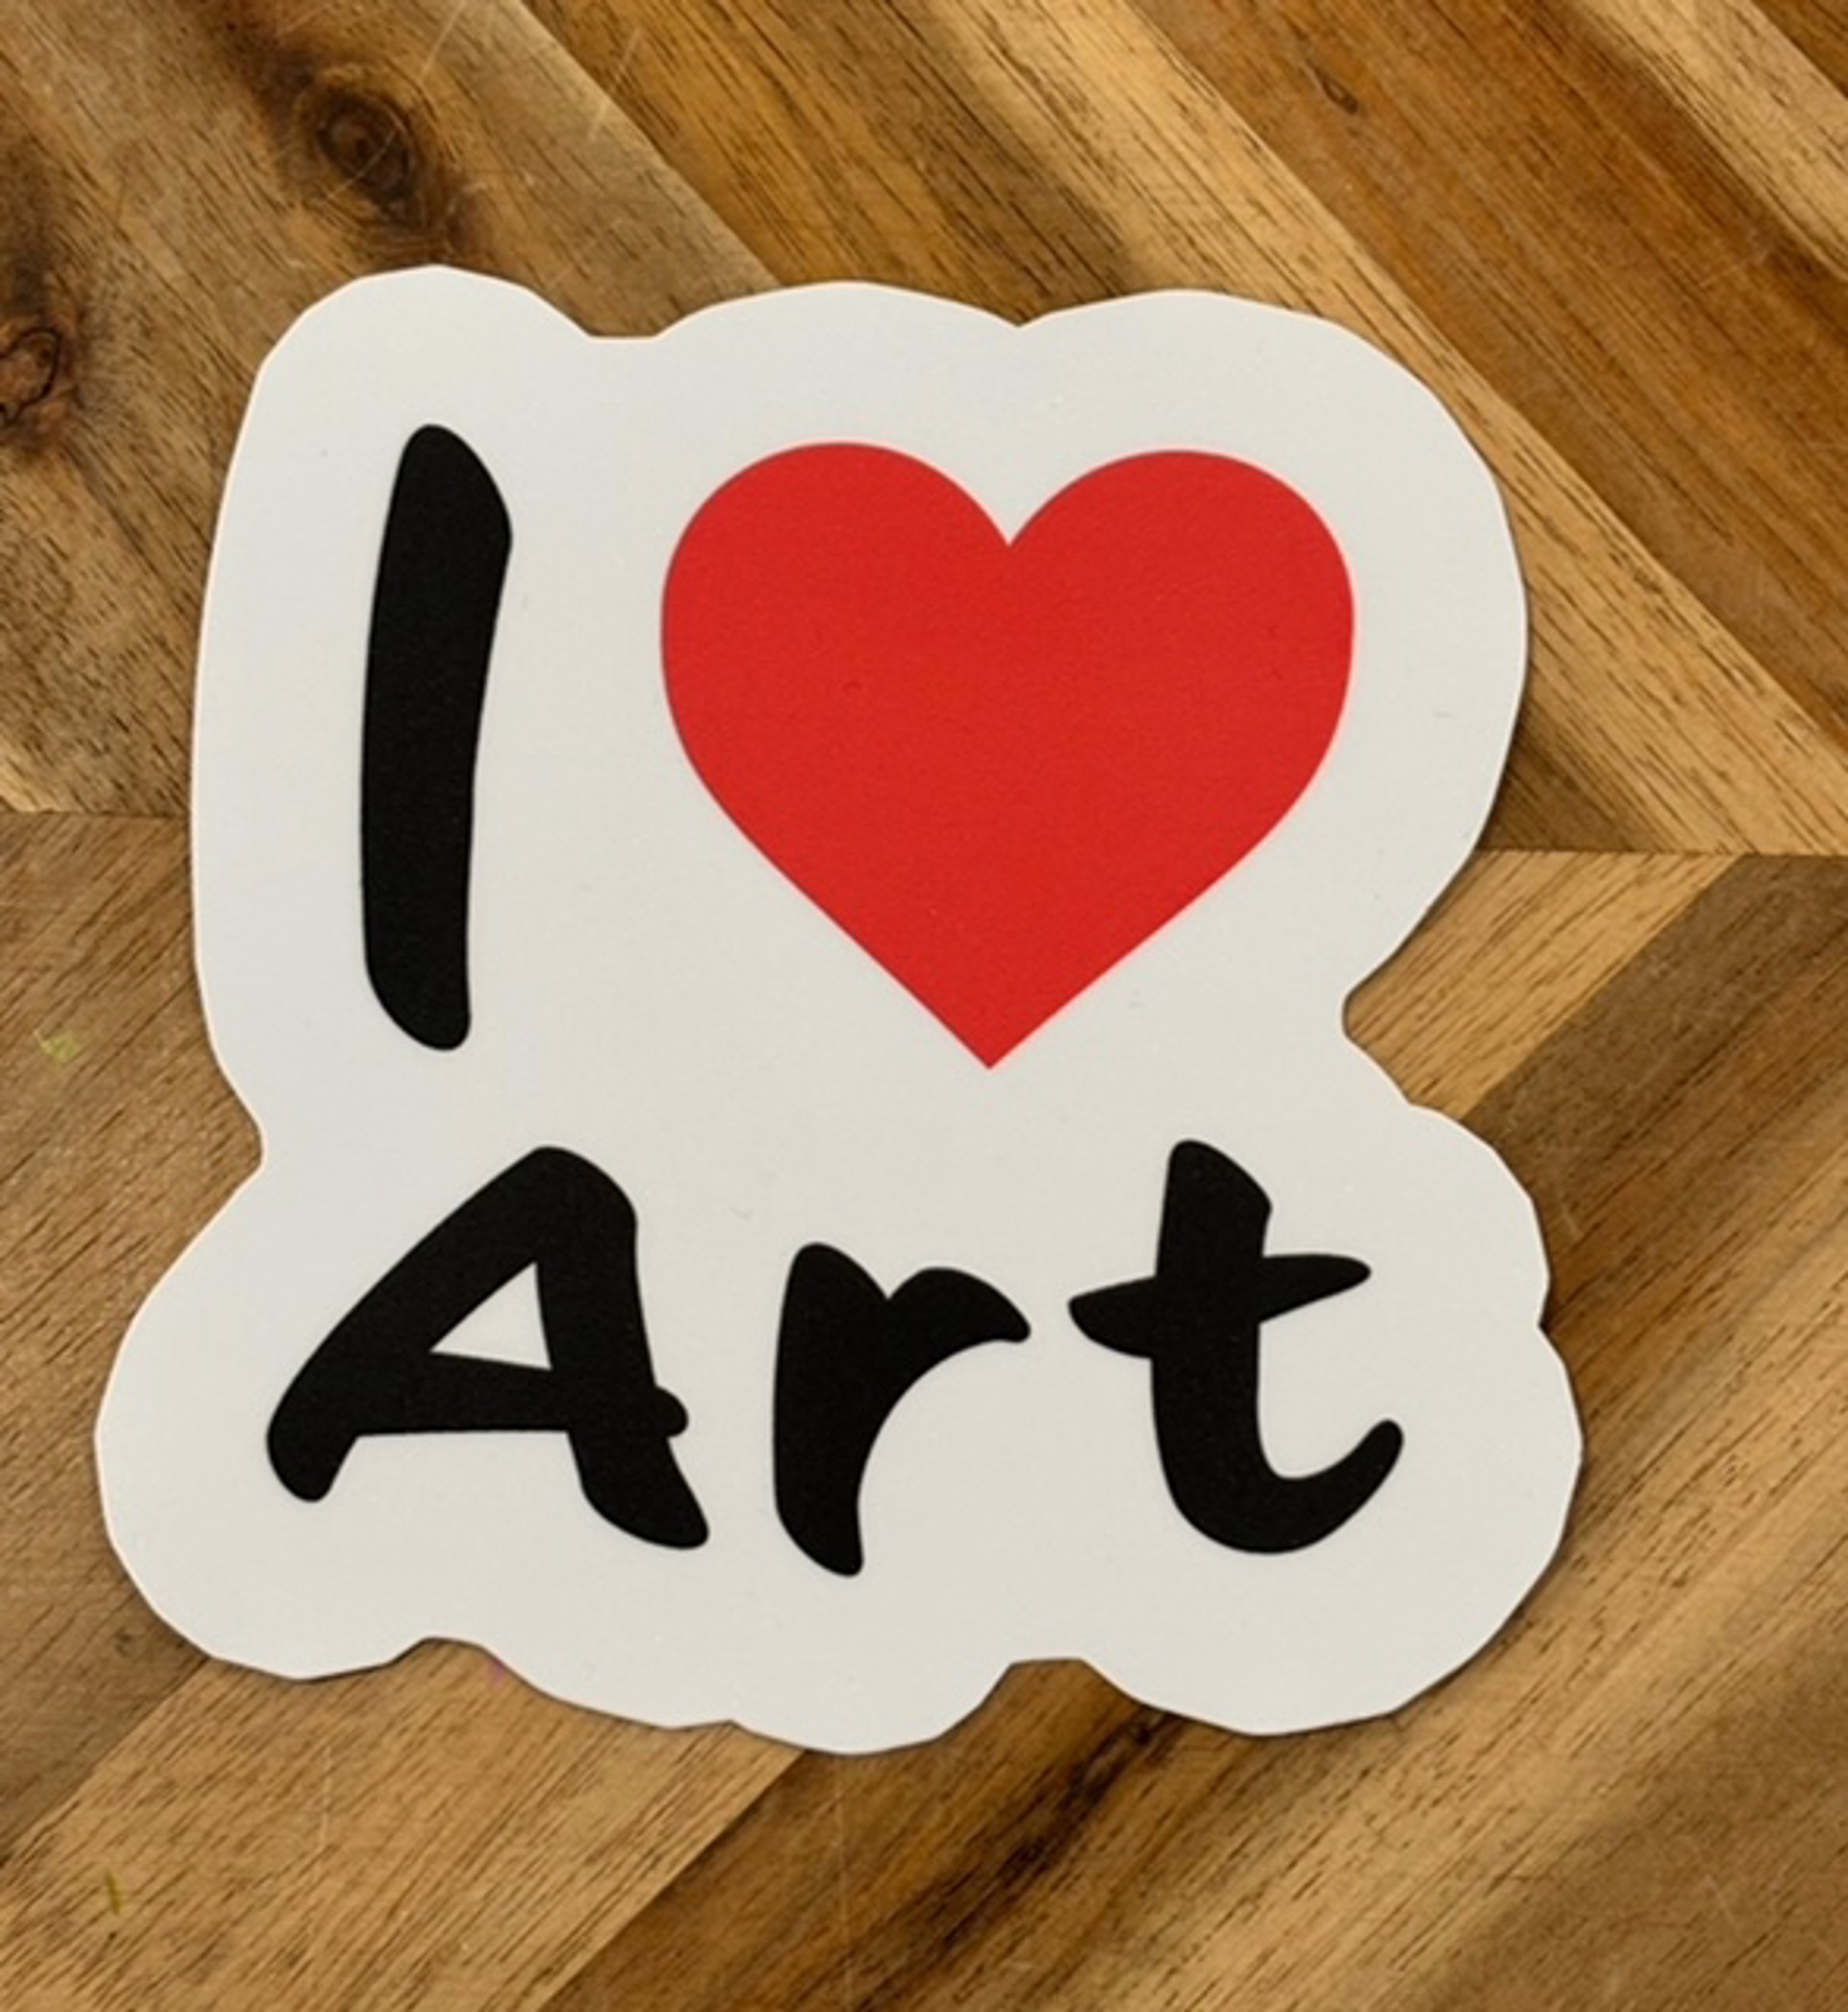 I Love Art Sticker by Pacesetter Merchandise